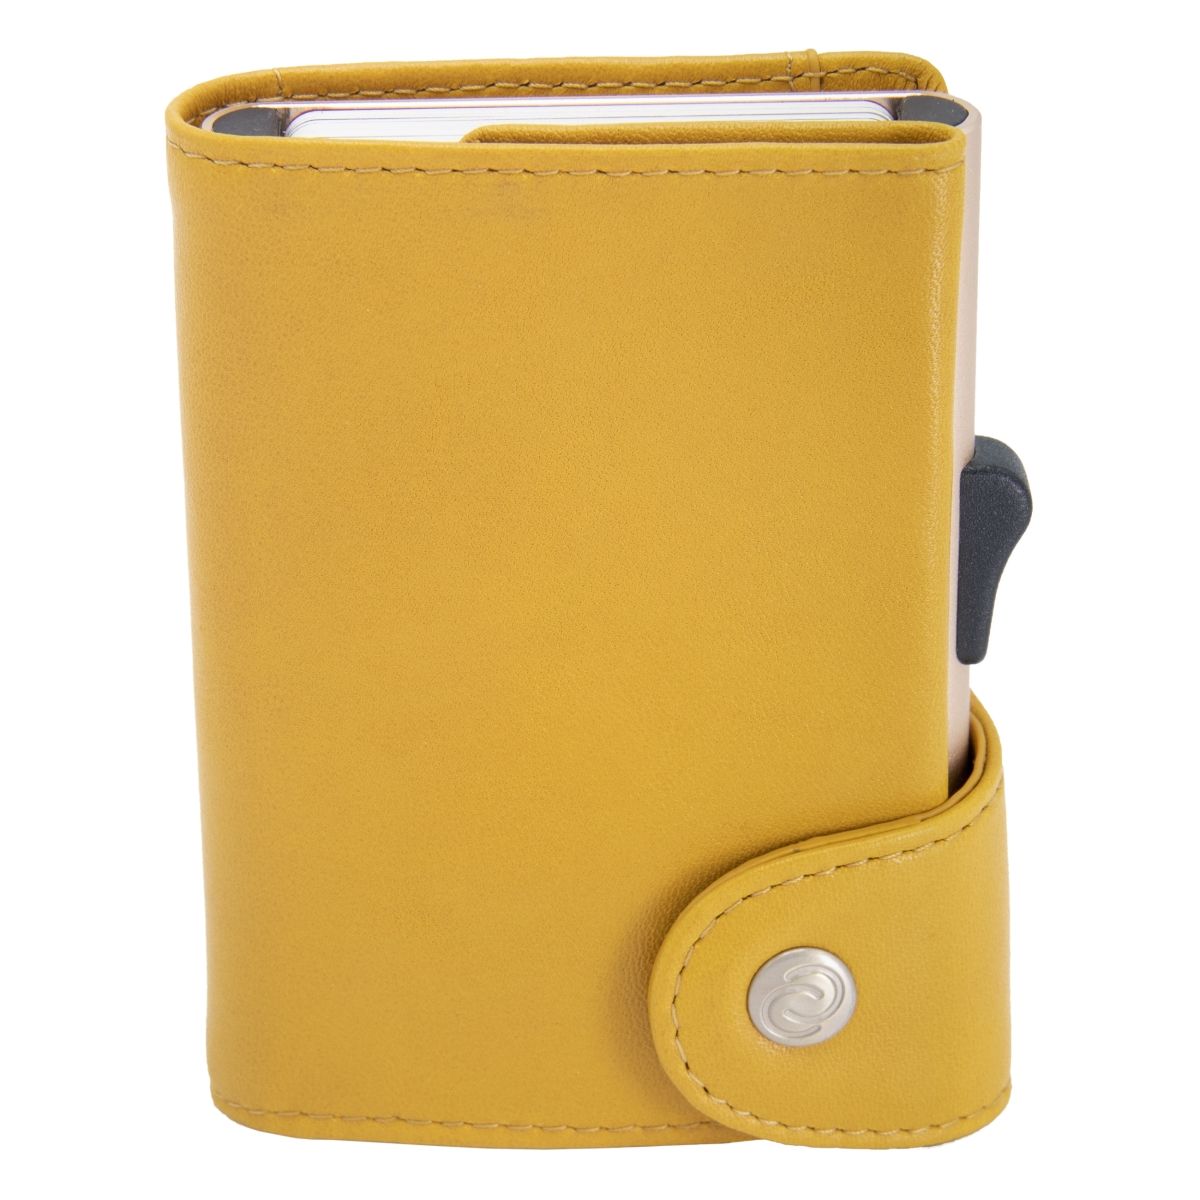 C-Secure ארנק אלומיניום XL בשילוב עור איטלקי עם תא למטבעות - צהוב חרדל